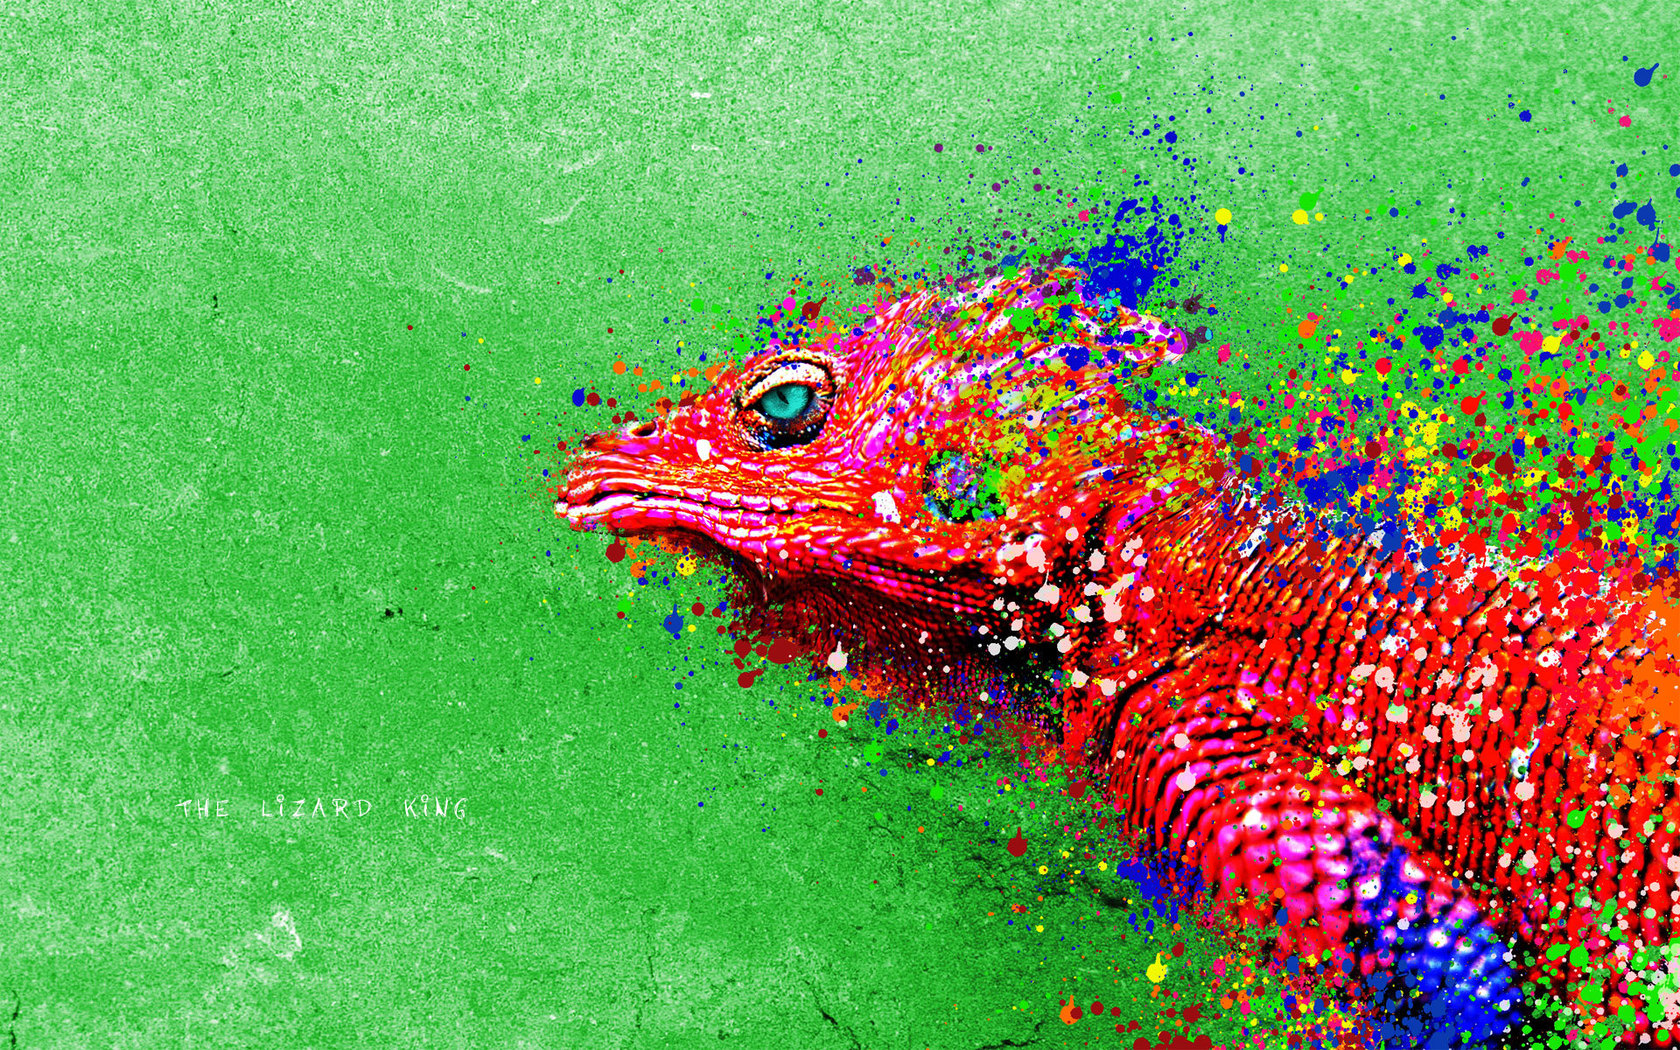  Iguana  Wallpaper  and Background Image 1680x1050 ID 